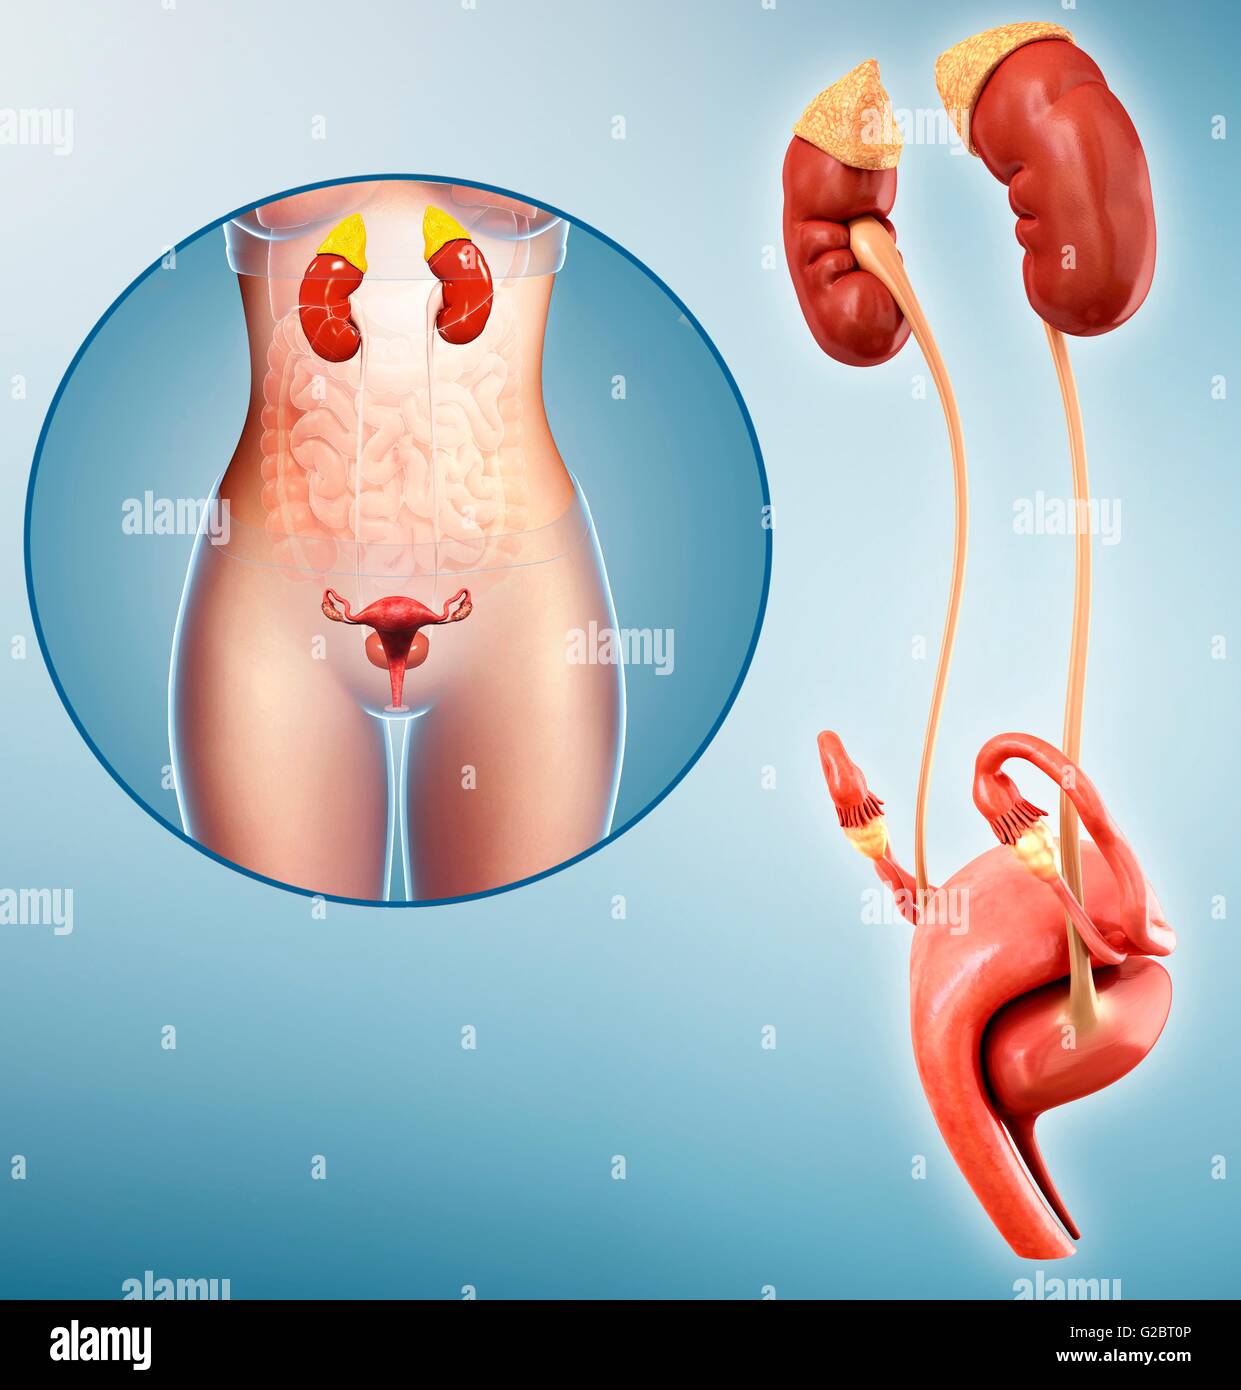 Female reproductive system, illustration. Stock Photo